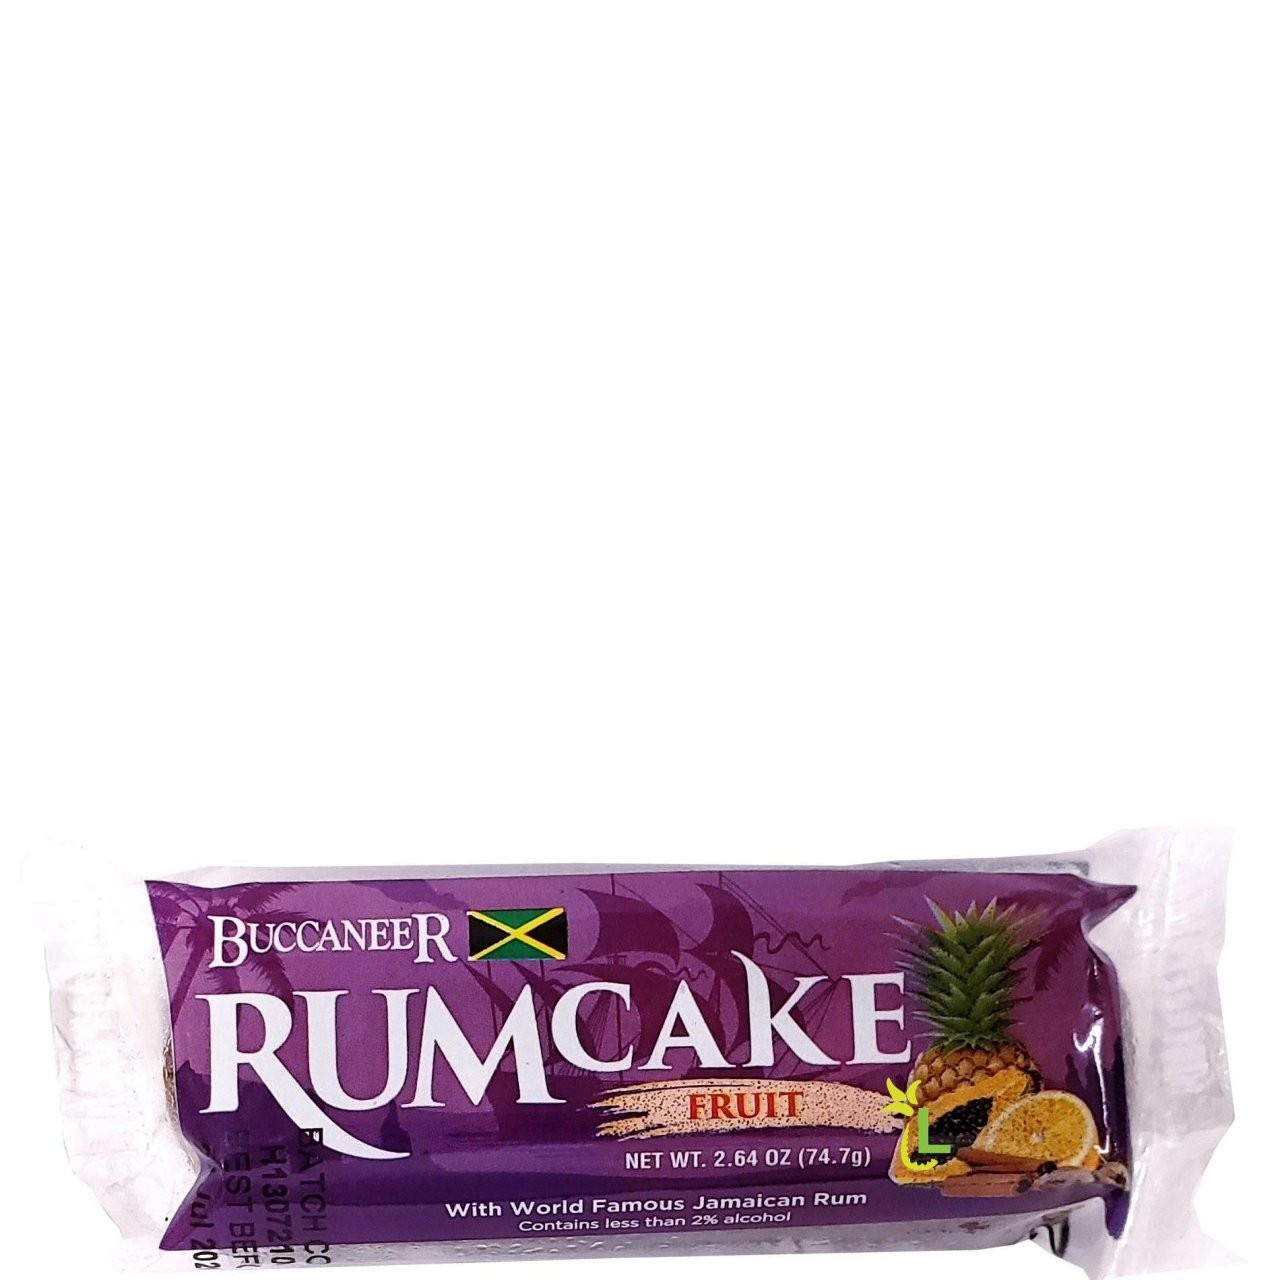 BUCCANEER RUM FRUIT CAKE 1.68oz